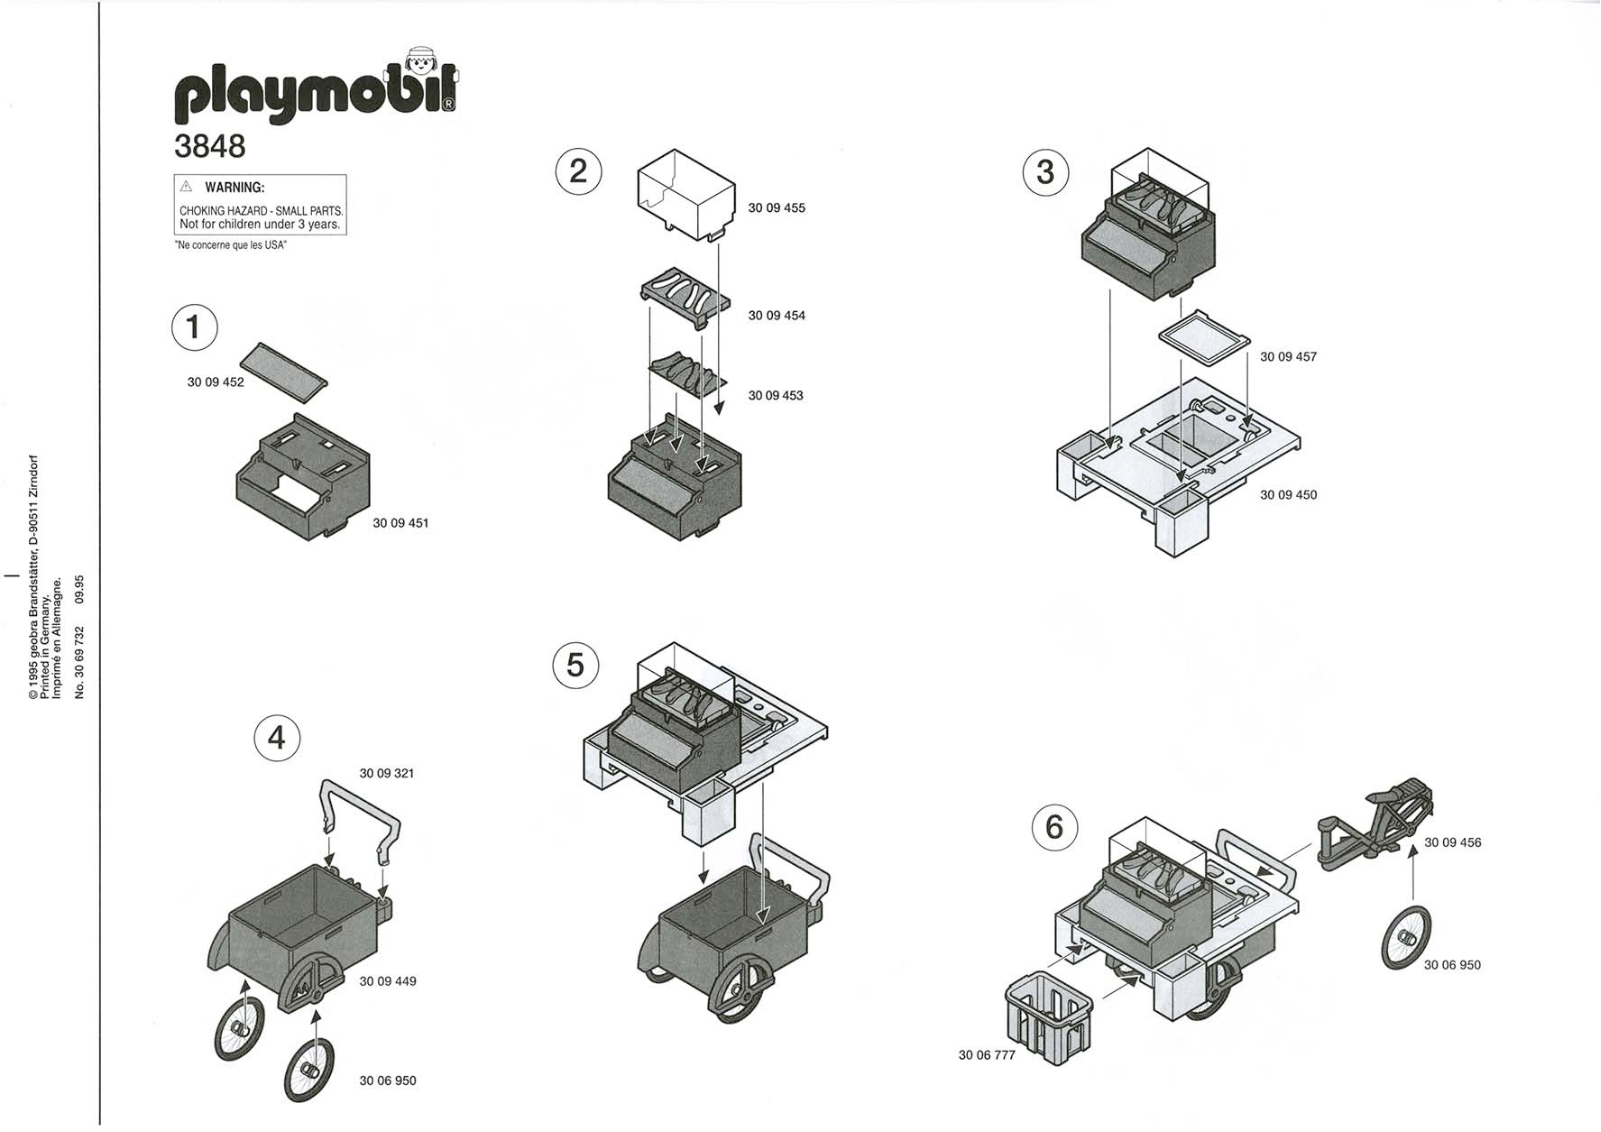 Playmobil 3848 Instructions